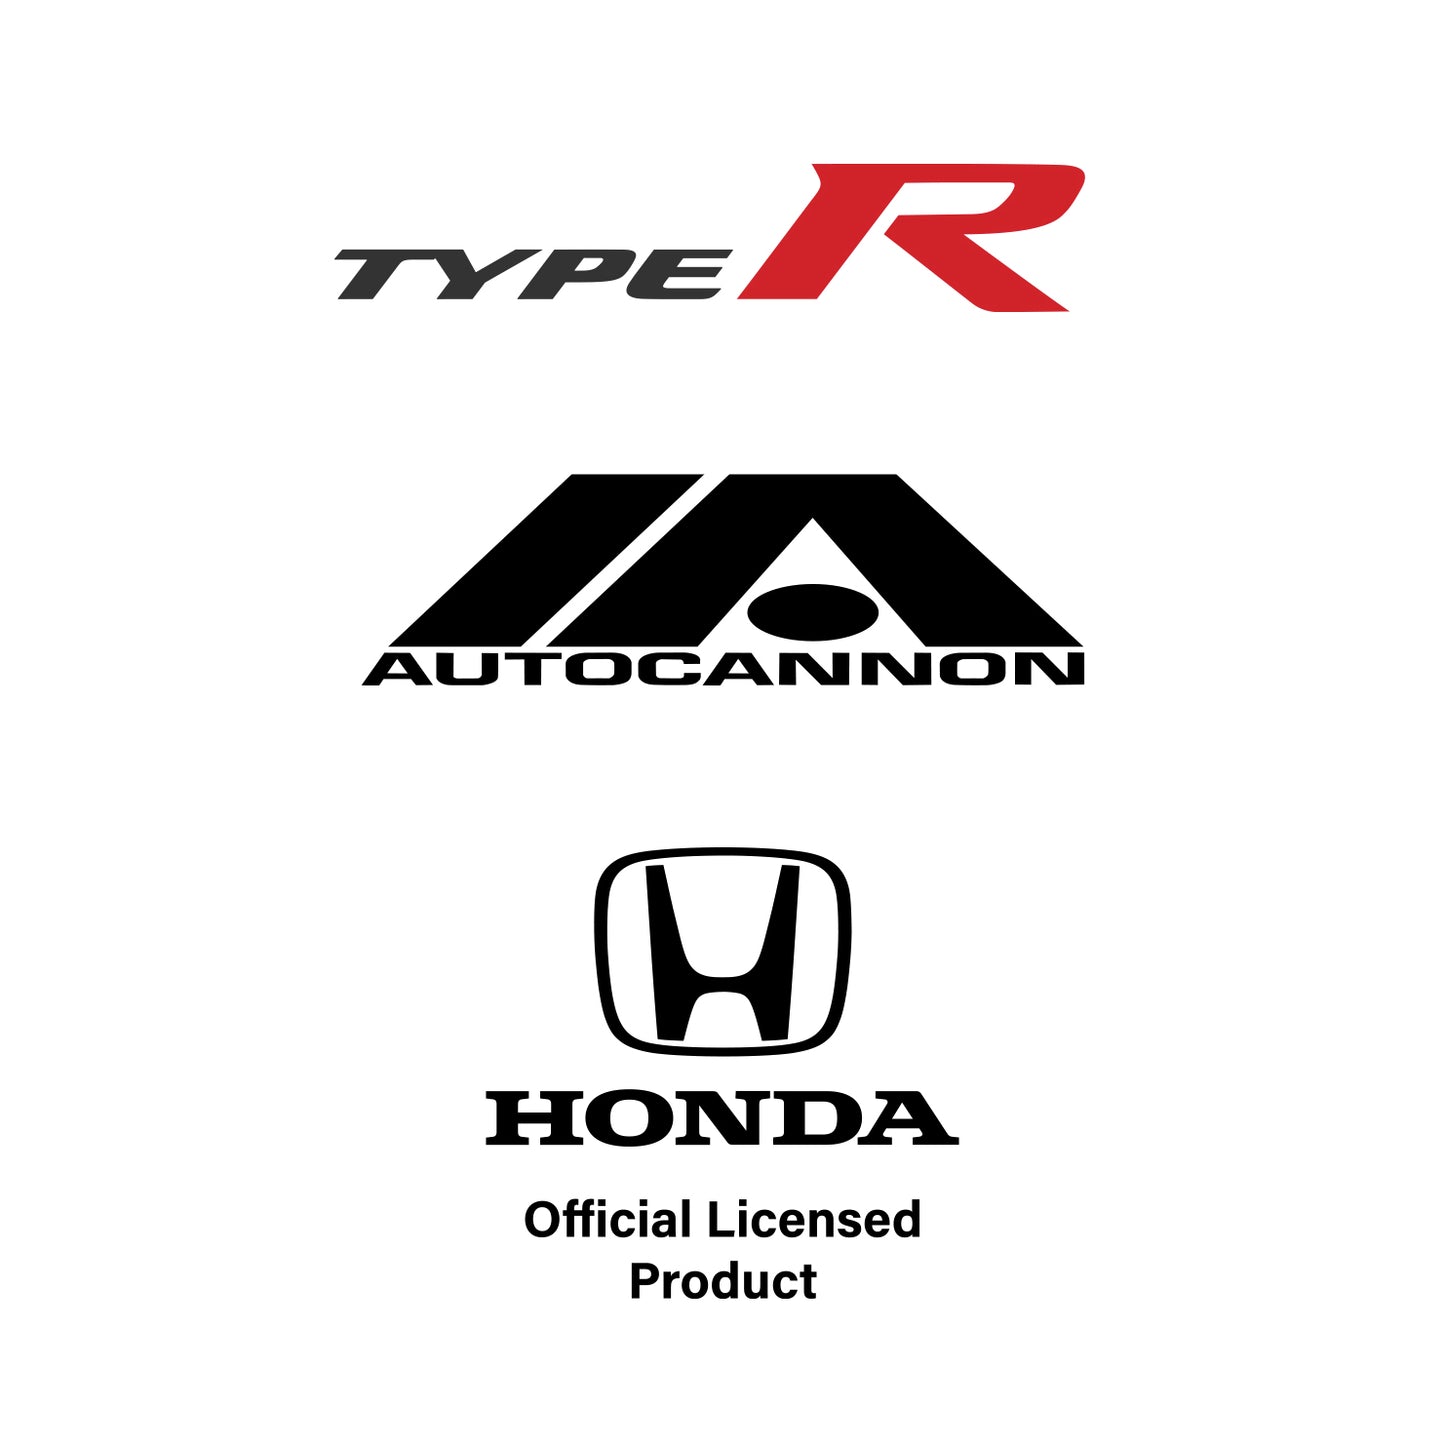 Autocannon x Honda Type R Camo Garage Banner FL5 - SERIES 2